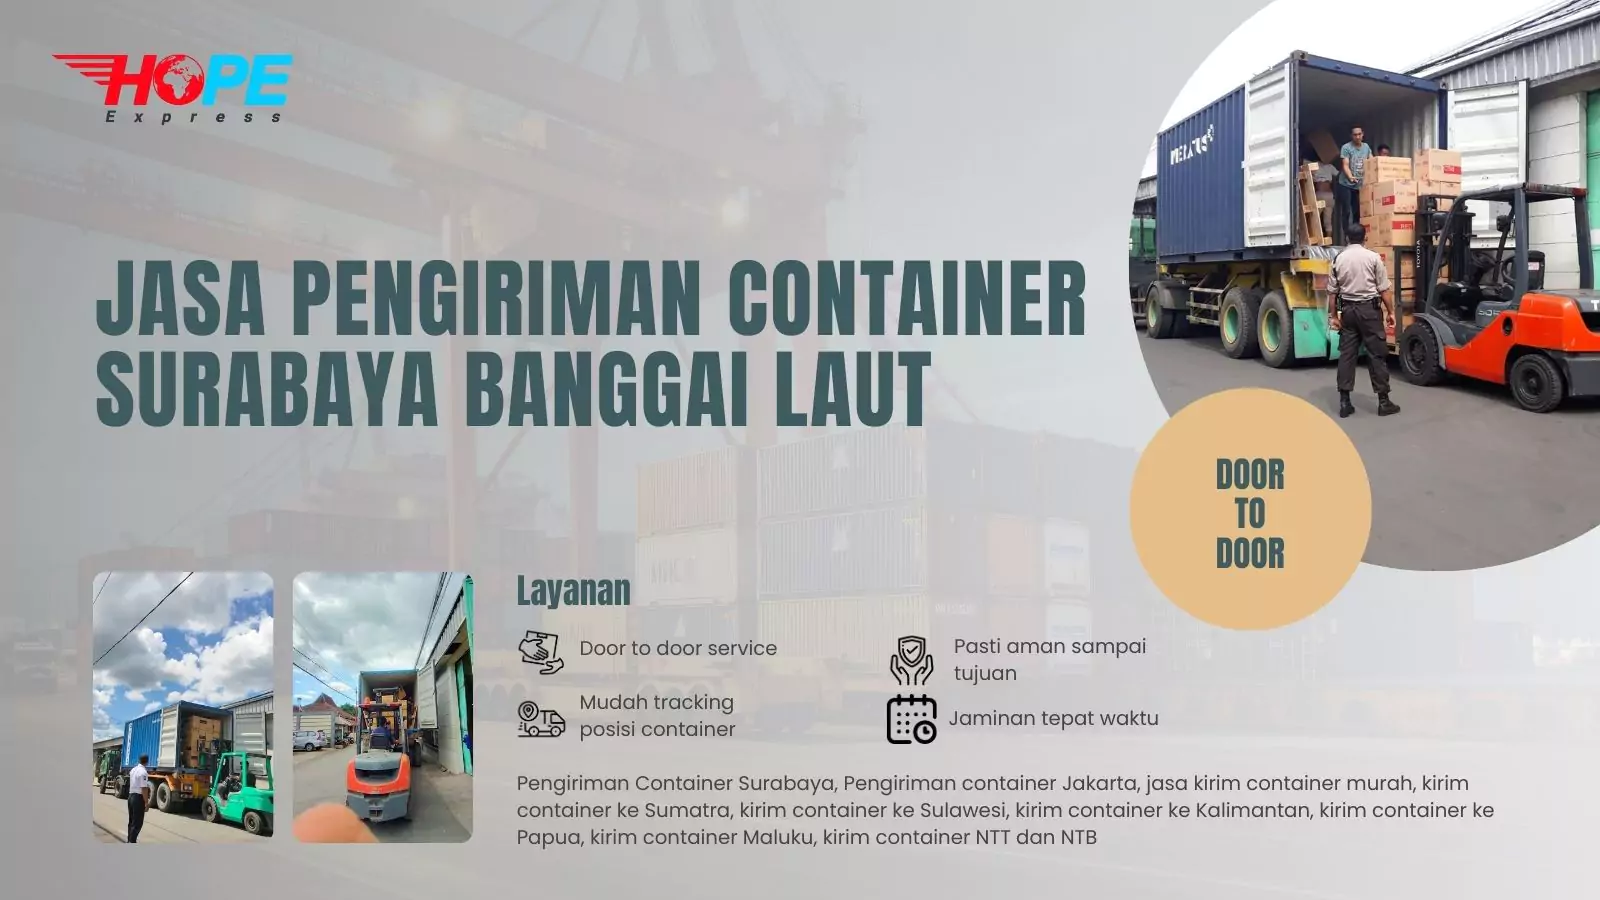 Jasa Pengiriman Container Surabaya Banggai Laut